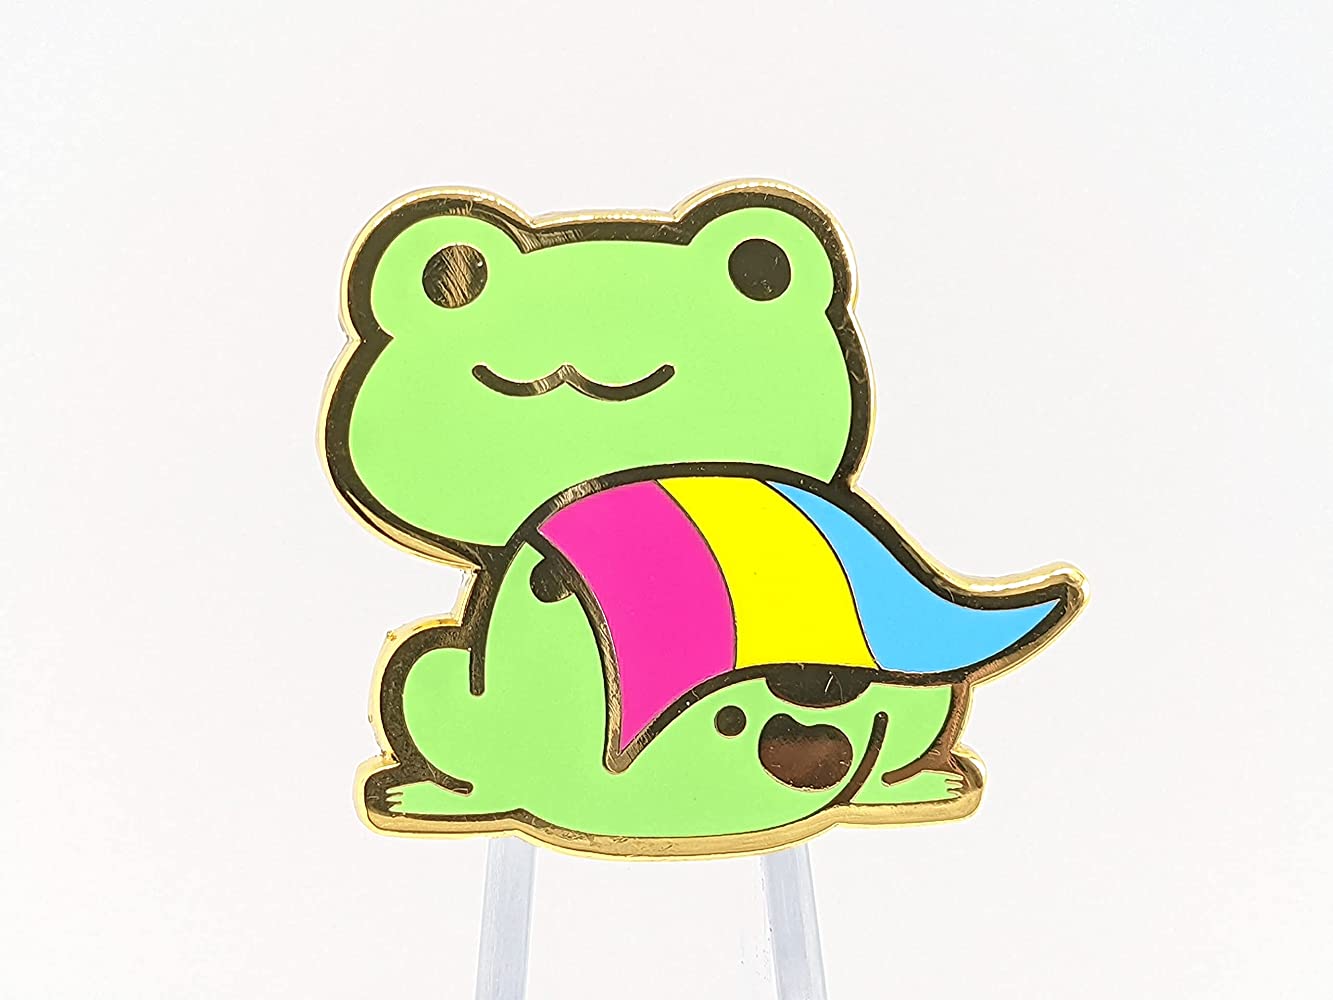 Pansexual Pride Frog Pin in Pan LGBT+ Flag Colors. Chibi Superhero Enamel Gay Frog Pin, Clothing, Shoes & Jewelry